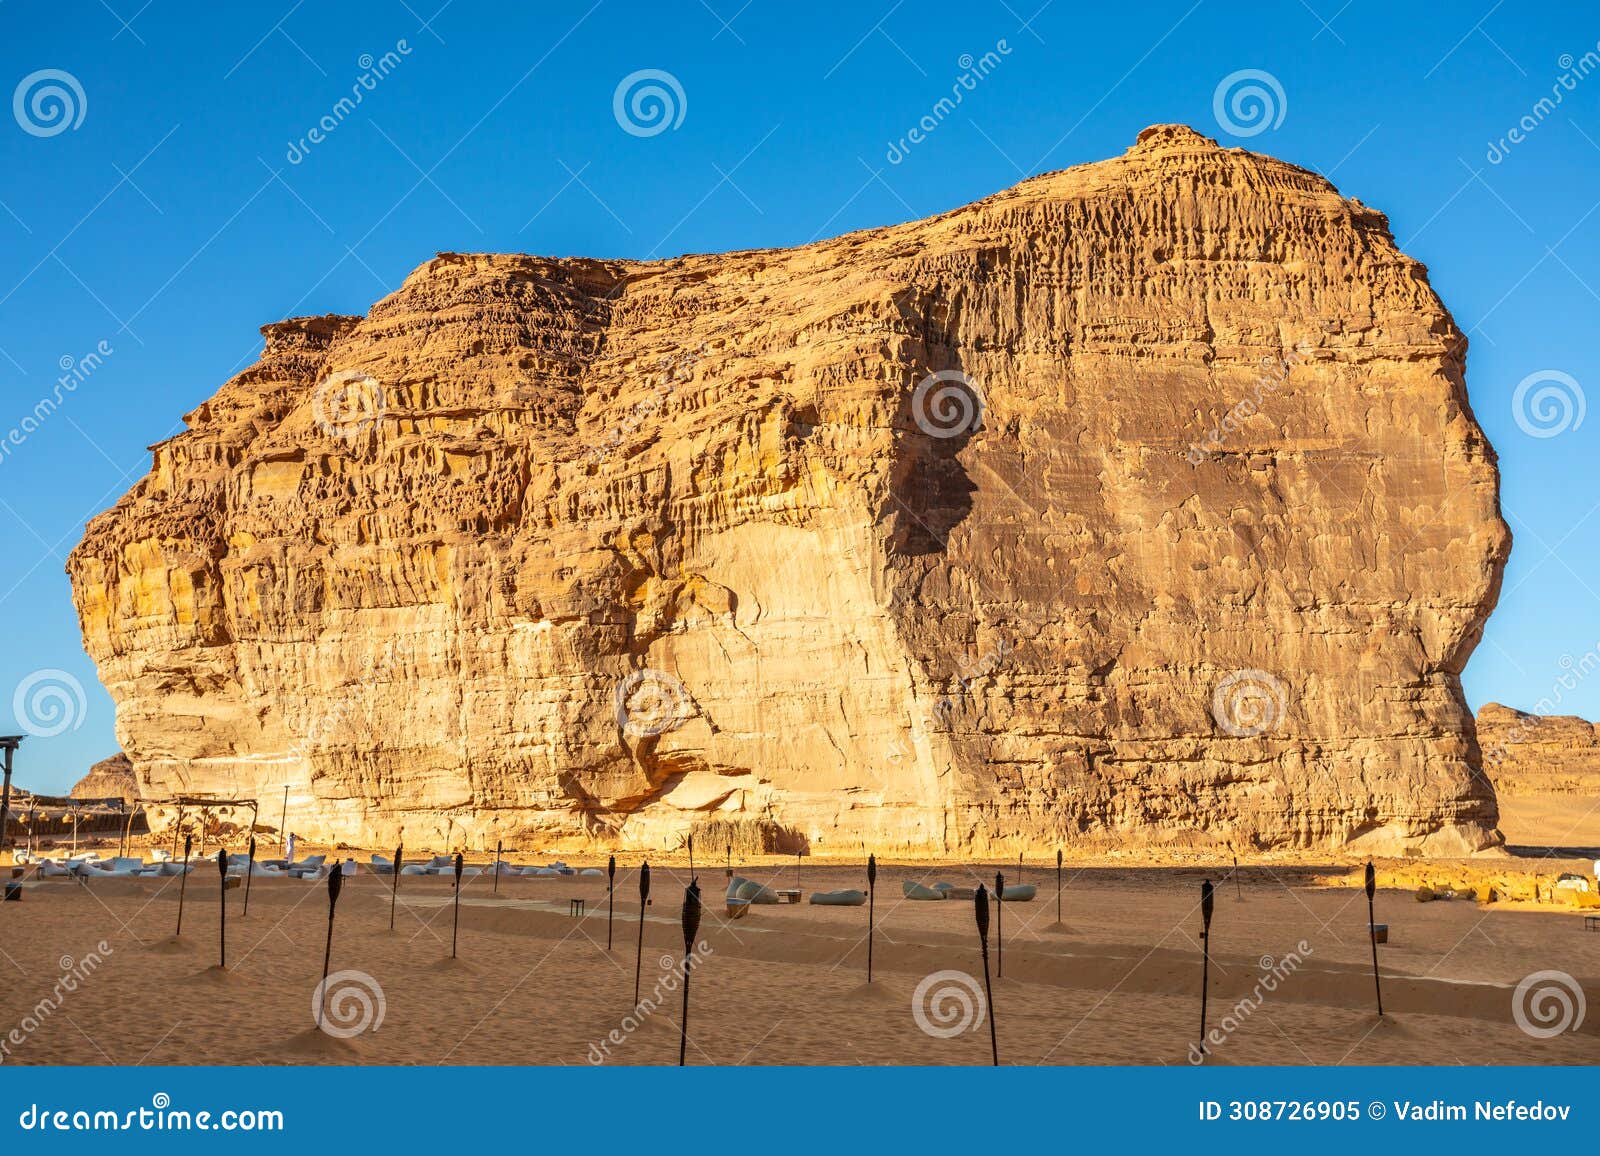 sandstone rock erosion monolith standing in the desert, al ula, saudi arabia